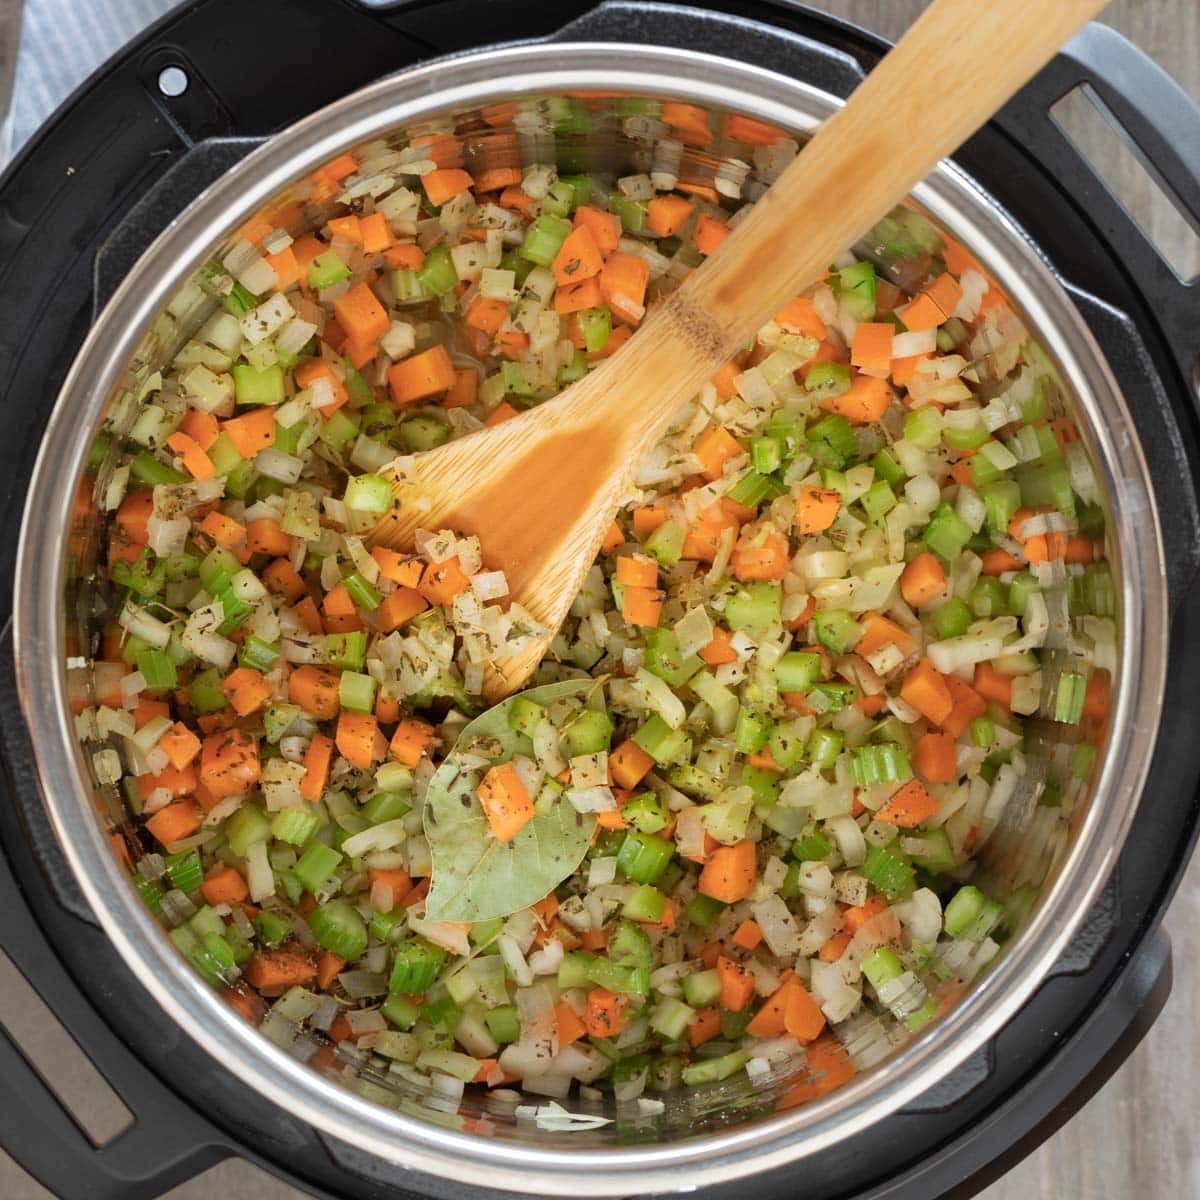 Vegetables sautéing in an Instant Pot before pressure cooking lentil soup.